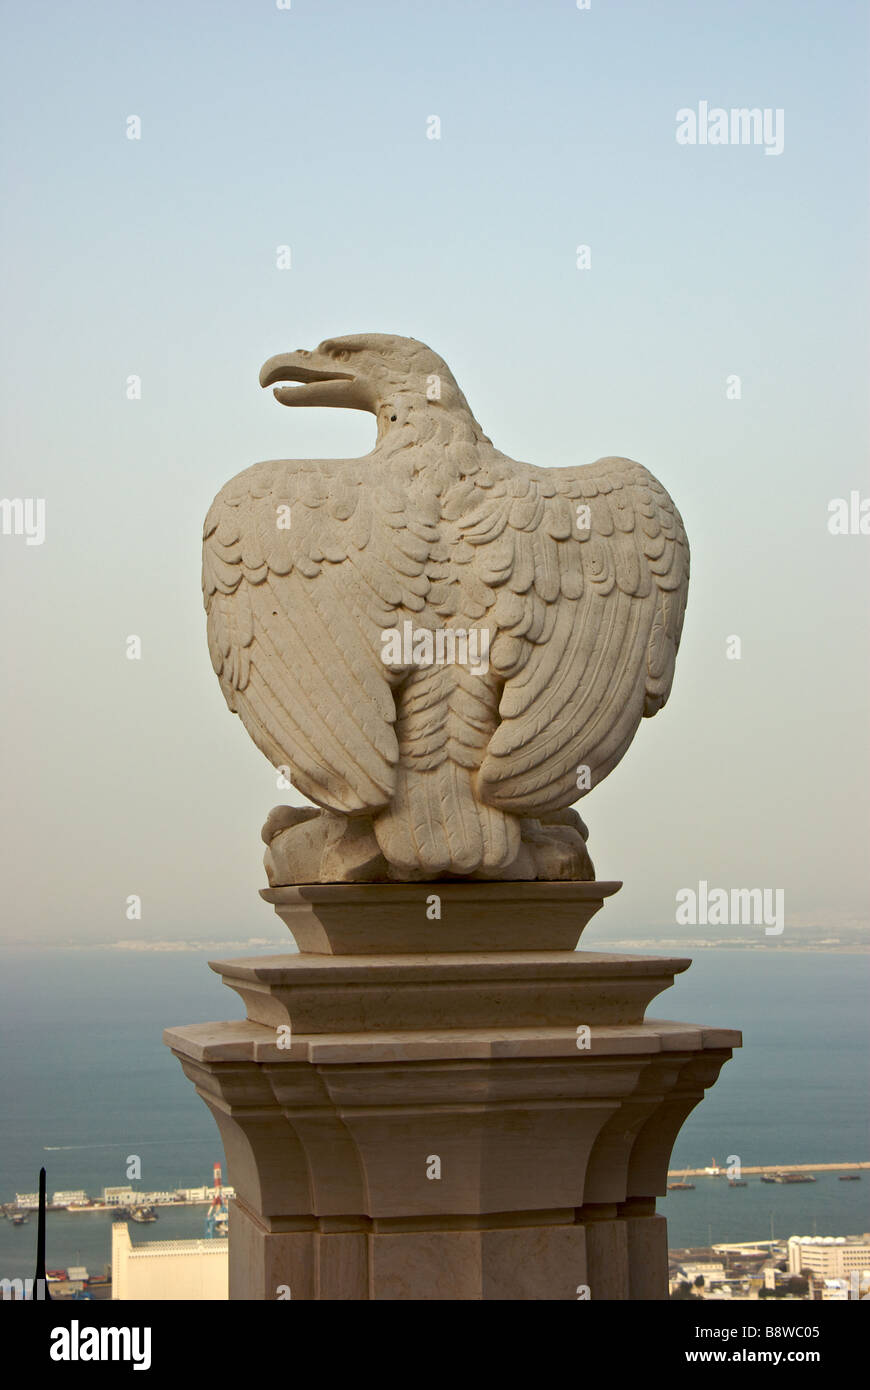 Stone eagle sculpture on parapet railing in Bahai Gardens overlooking port of Haifa on Mediterranean sea coast Stock Photo